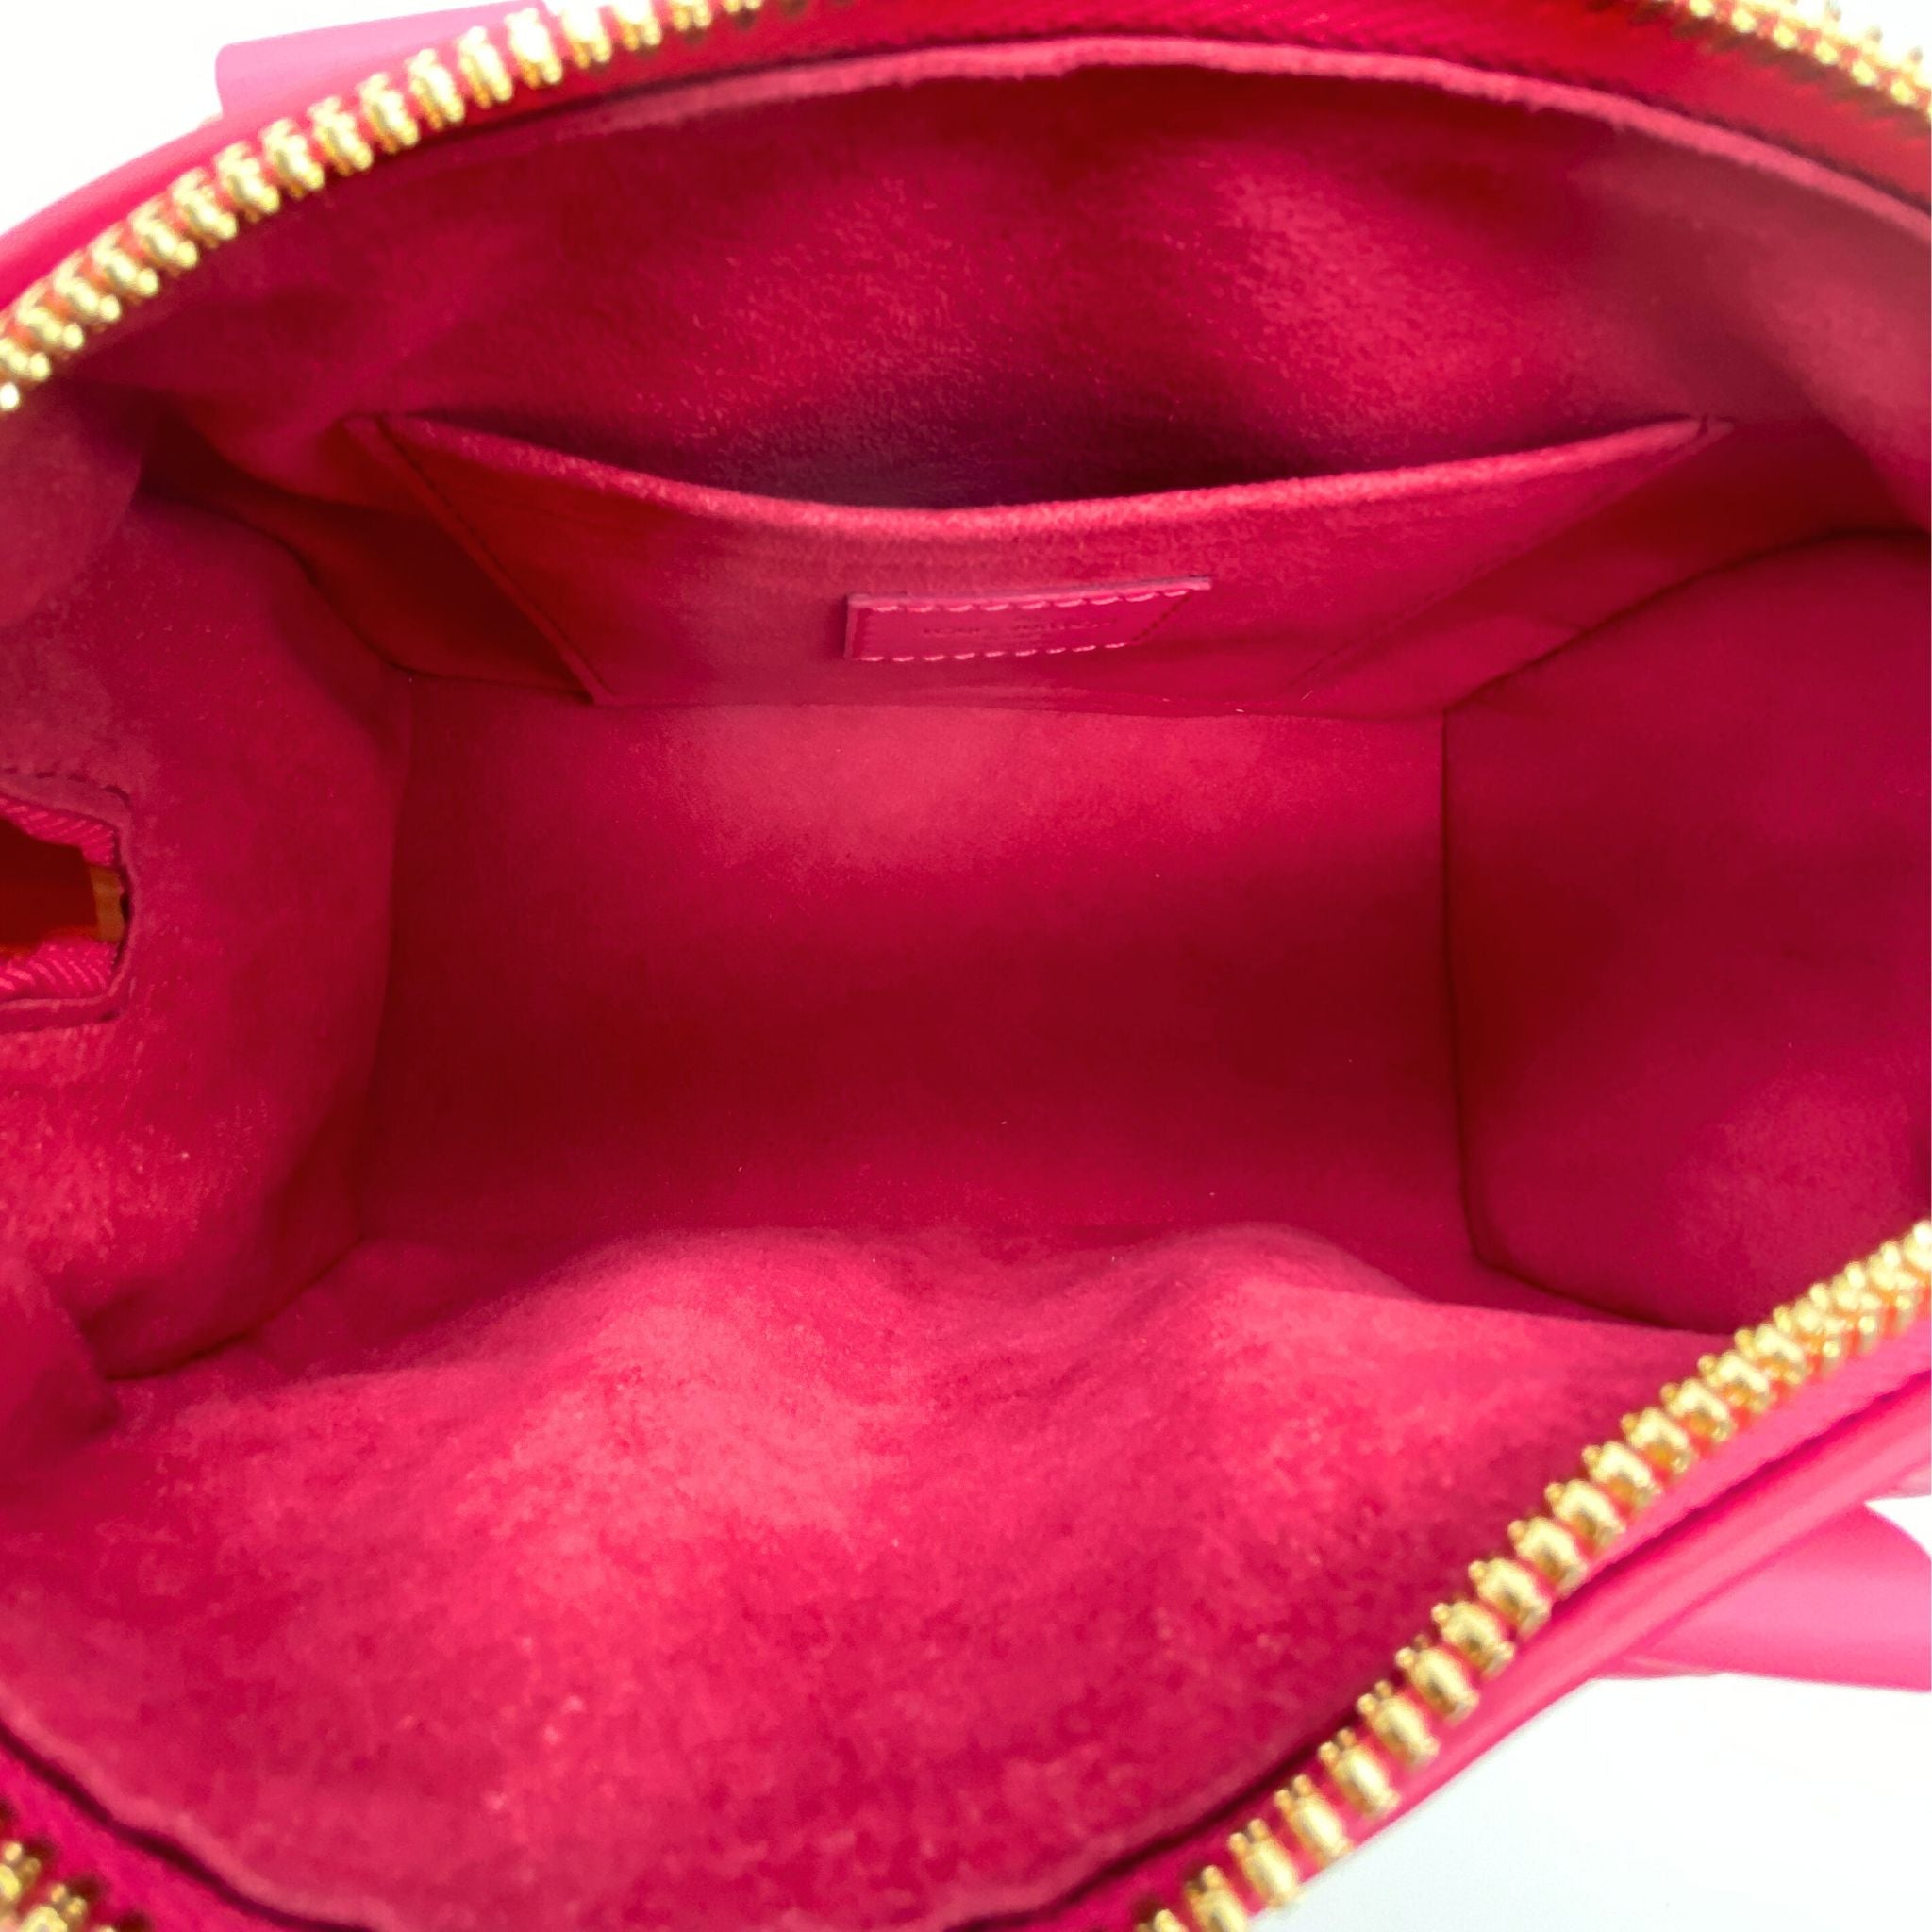 Rose Speedy Bandoulière 20 - Leather Crossbody Bag for Women